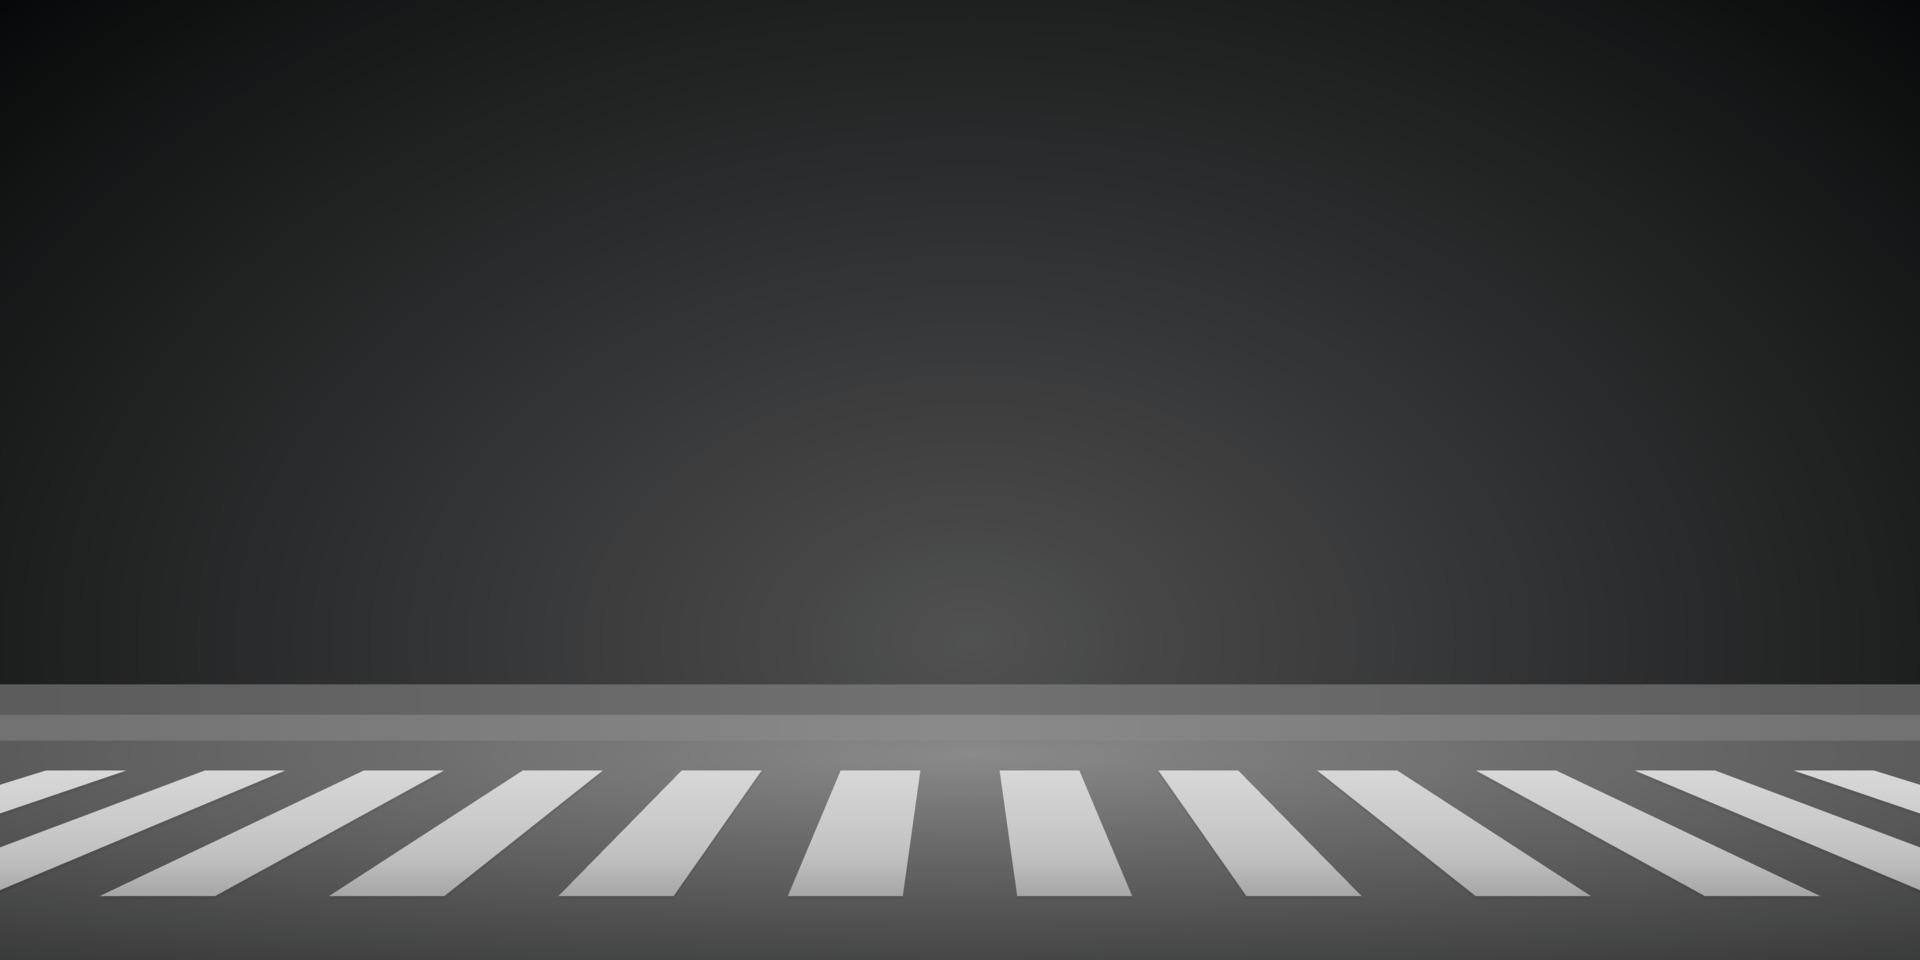 crosswalk on street with black background scene 3d illustration vector